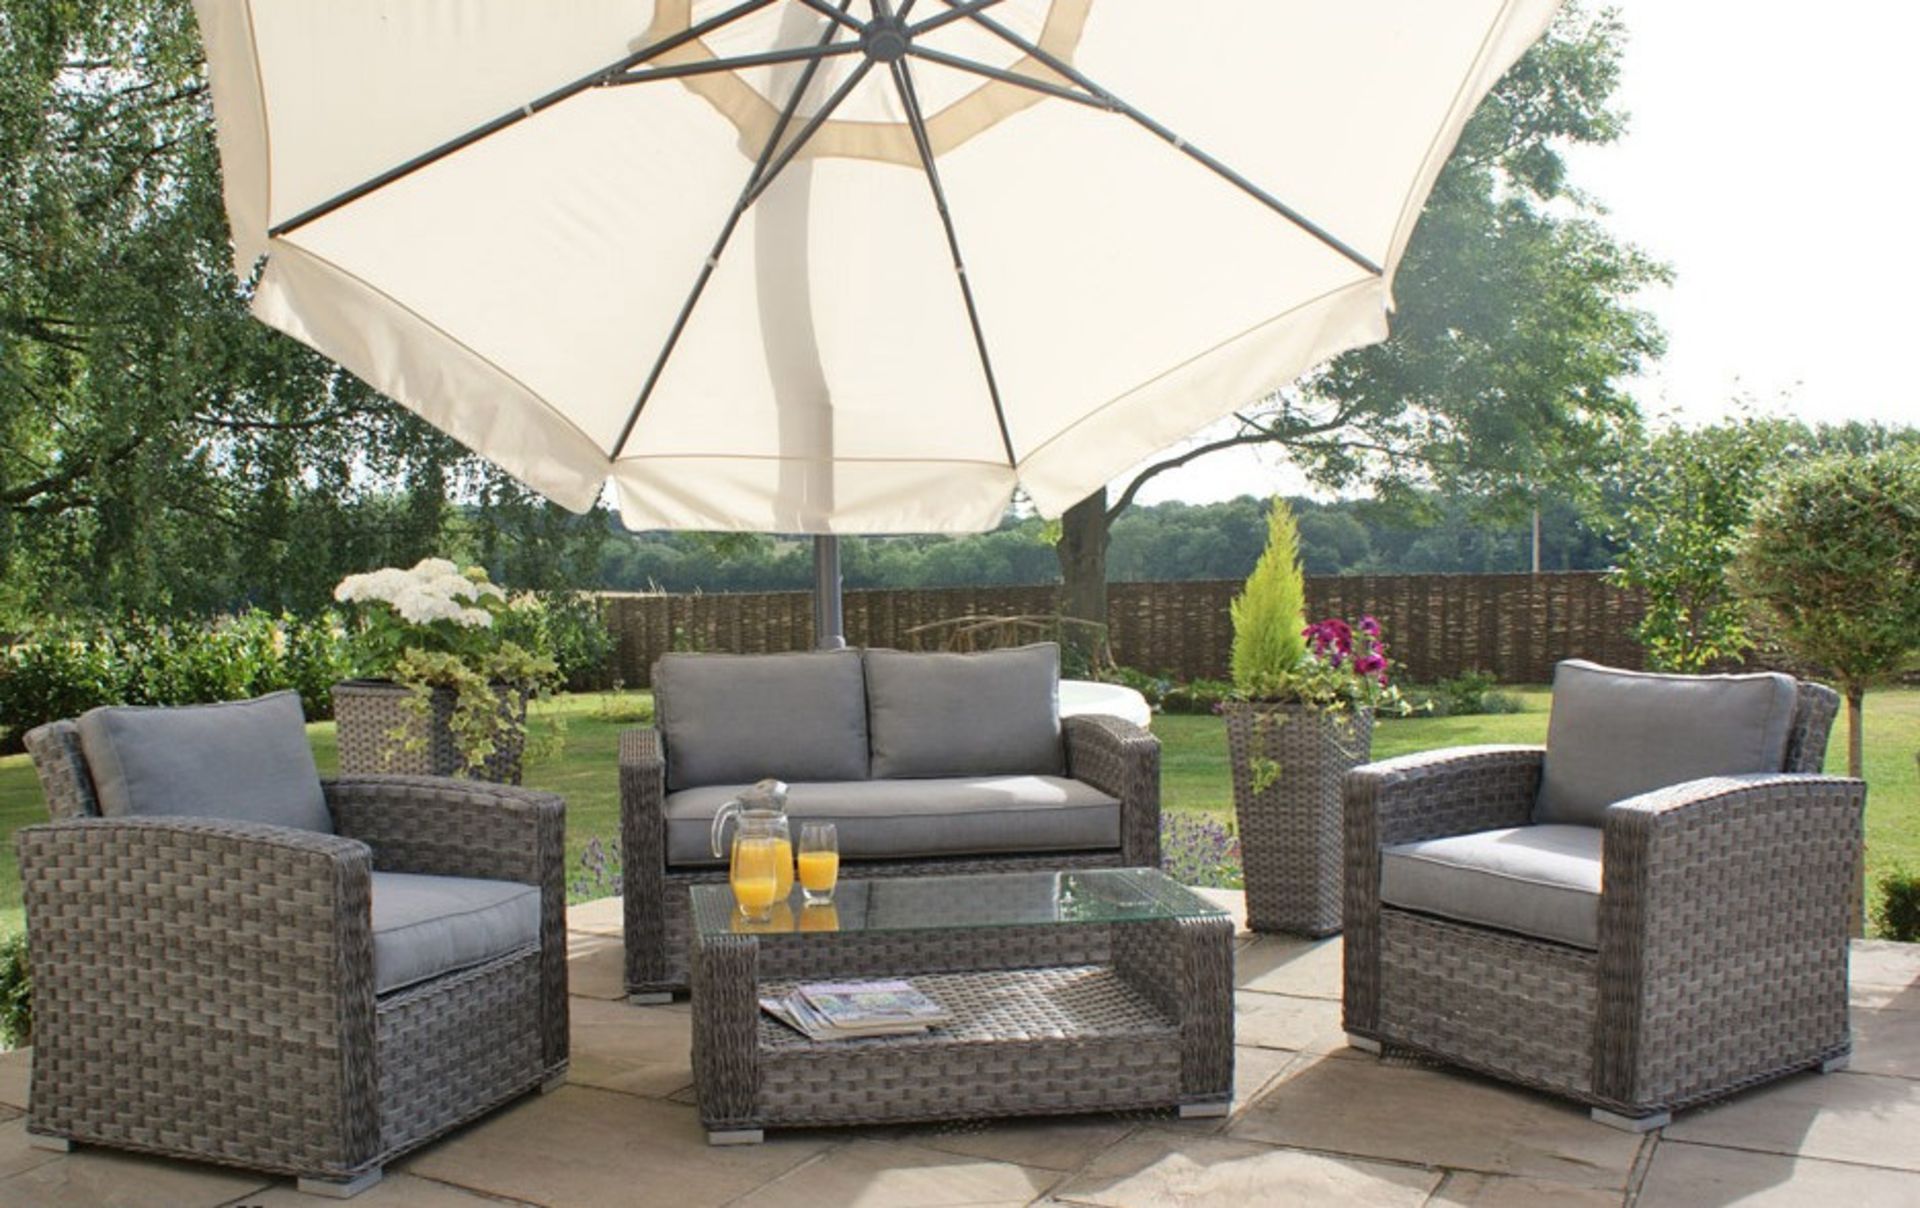 V Brand New Chelsea Garden Company Four Piece Grey Rattan Outdoor Sofa Set - Includes Two Single